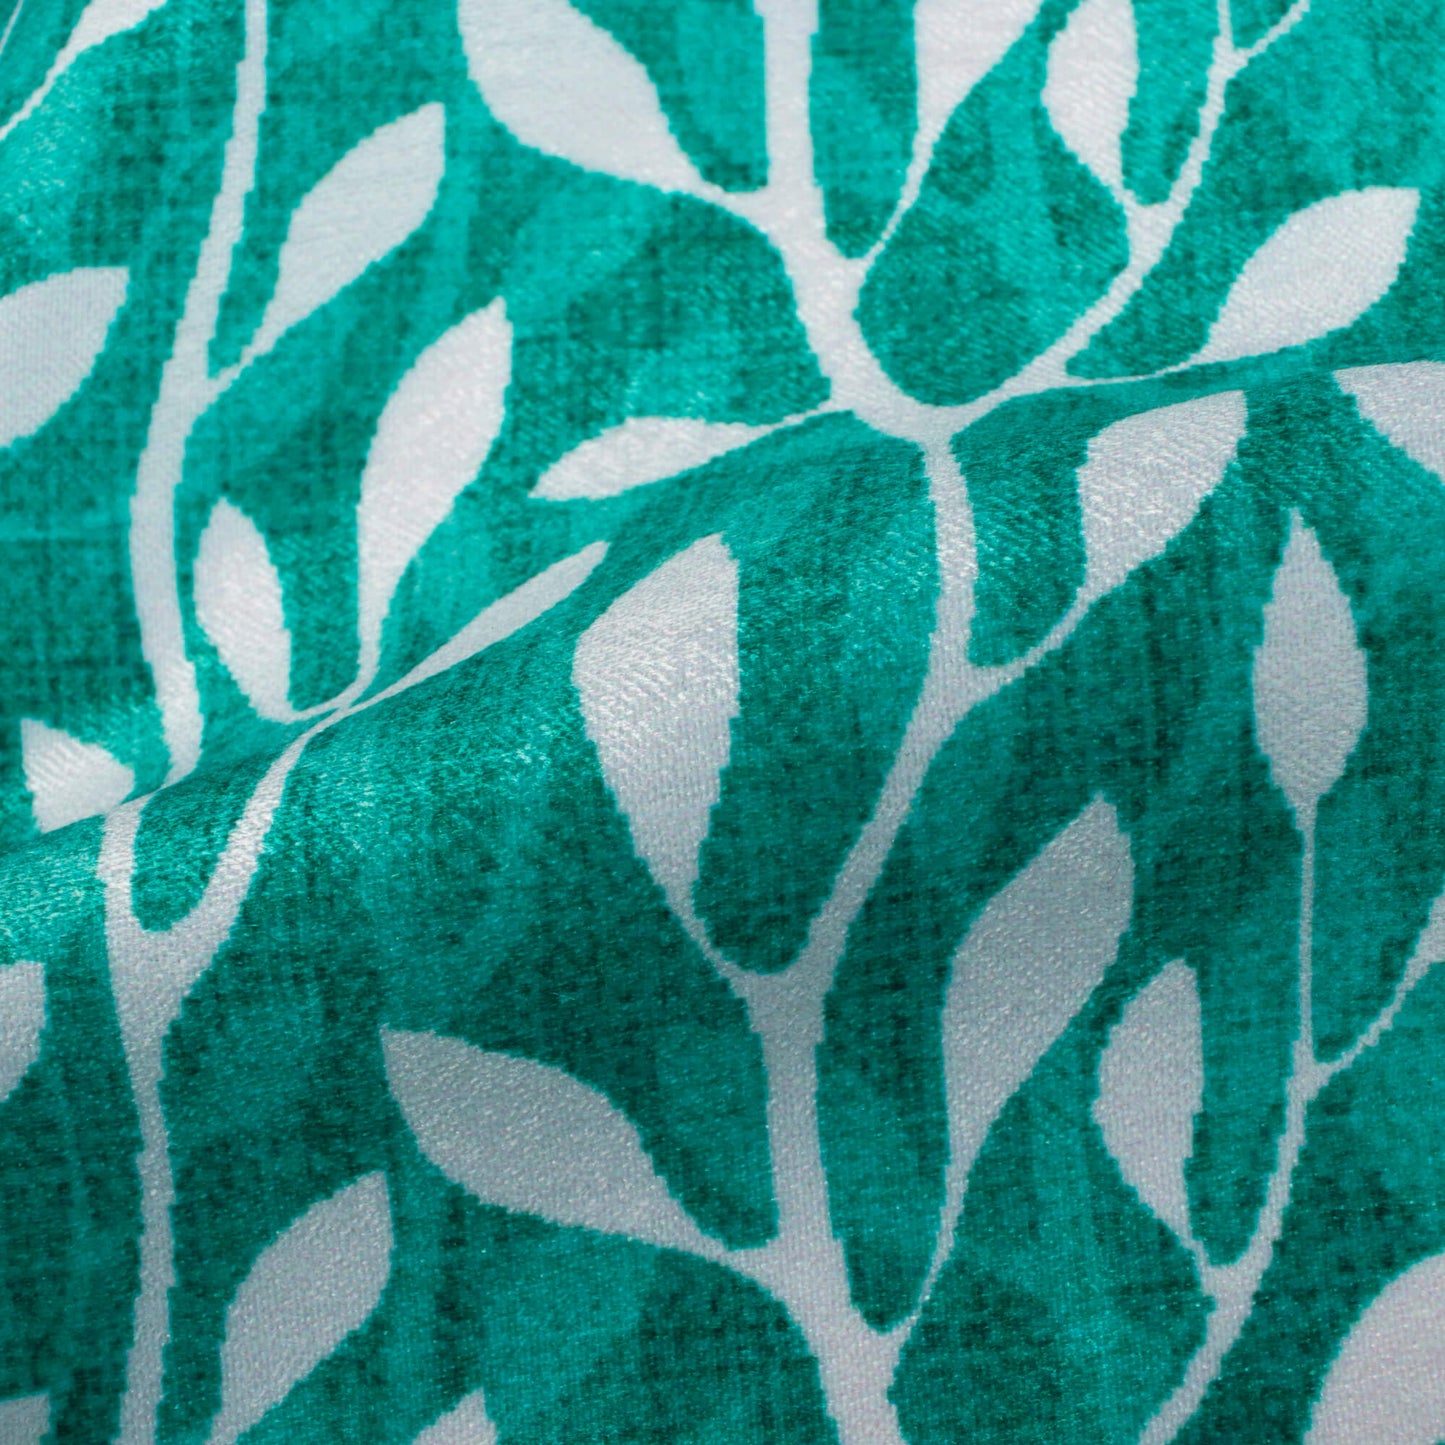 Sea Green And White Leaf Pattern Digital Print Lush Satin Fabric